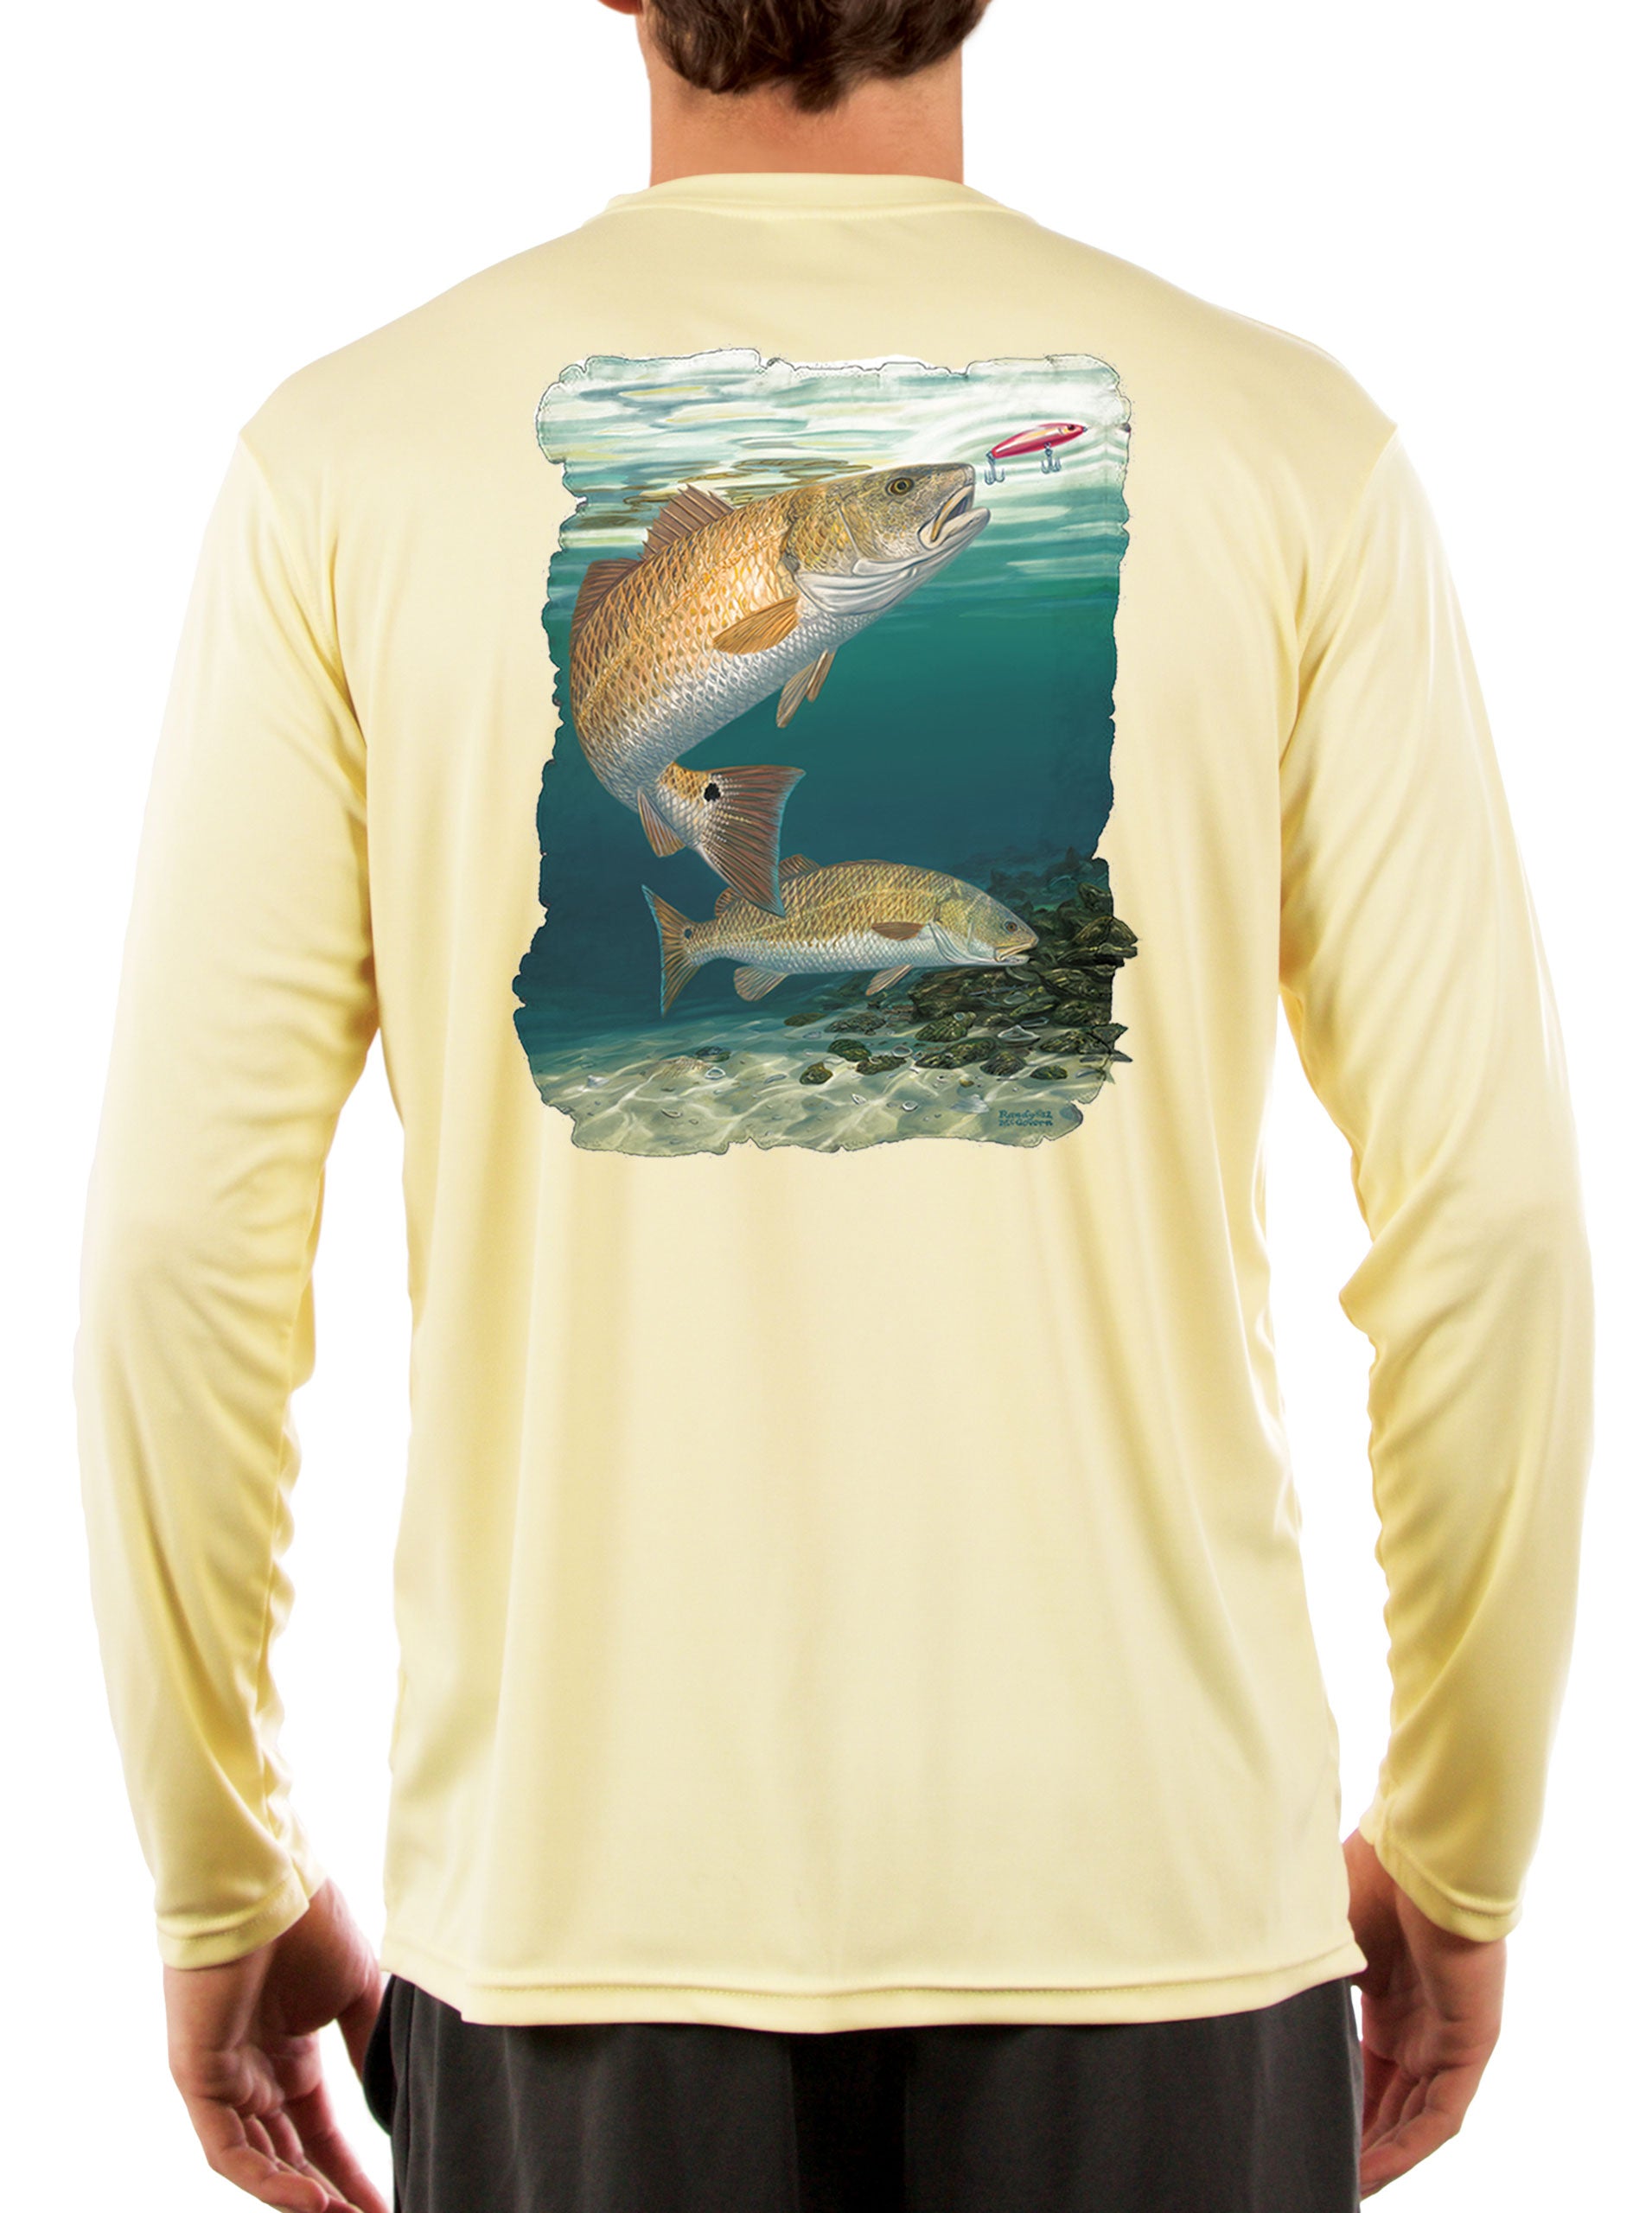 Redhot Redfish Fishing Shirt Art by Randy McGovern - Skiff Life